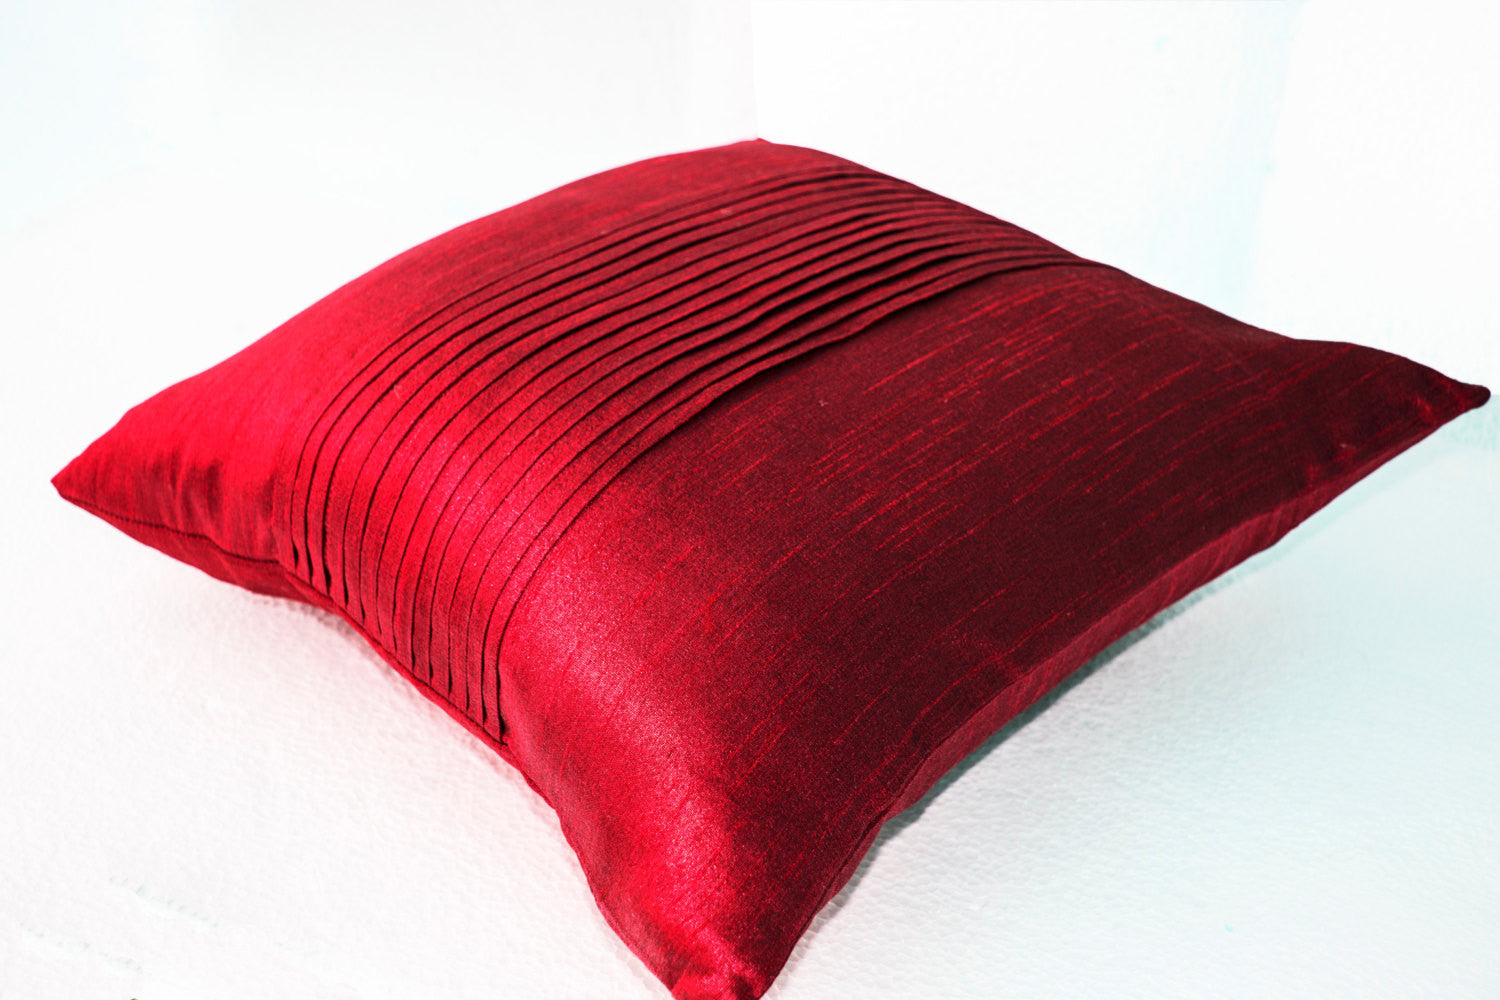 Red Velvet Throw Pillow Cover, Red Throw Pillows, Red Pillow Cover, Red  Pillows, Red Sofa Pillows, Red Accent Pillows, Red Pillows 18x18 